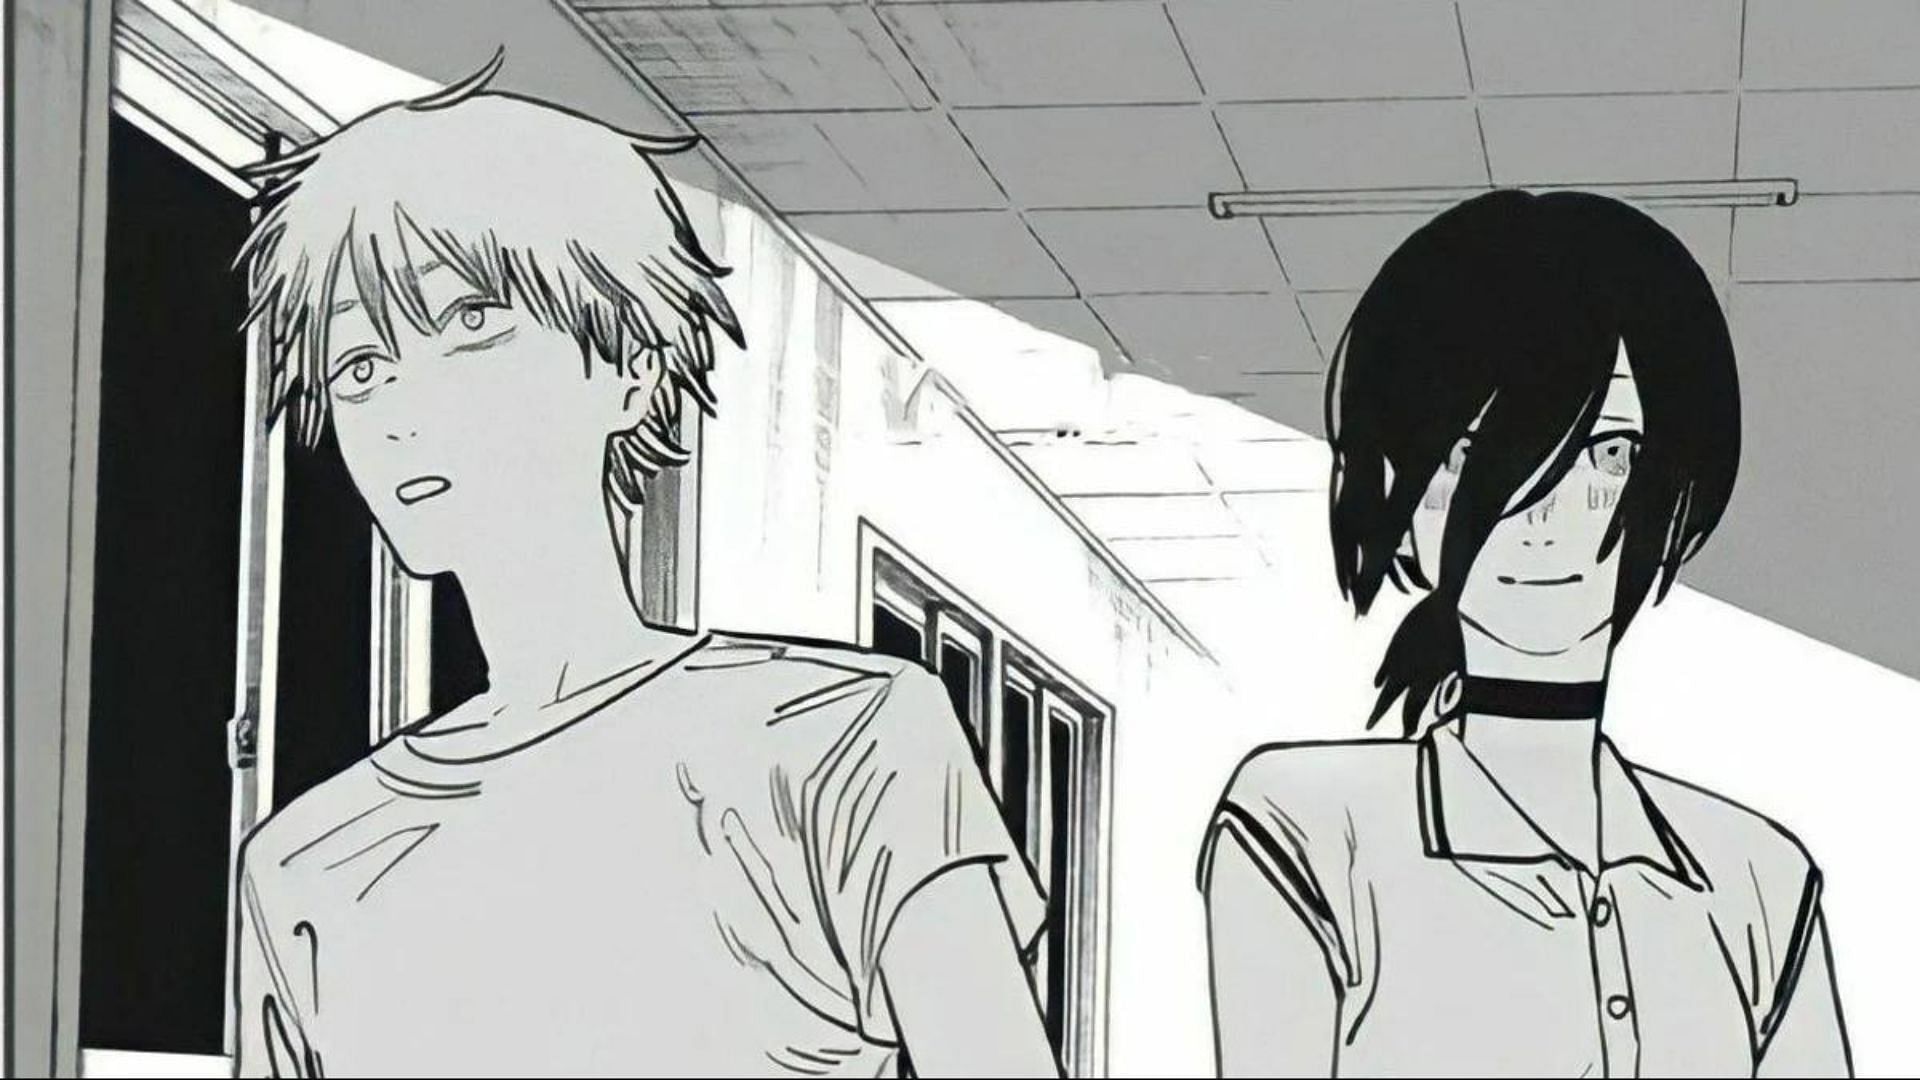 Denji and Reze as seen in Chainsaw Man manga (Image via Shueisha)